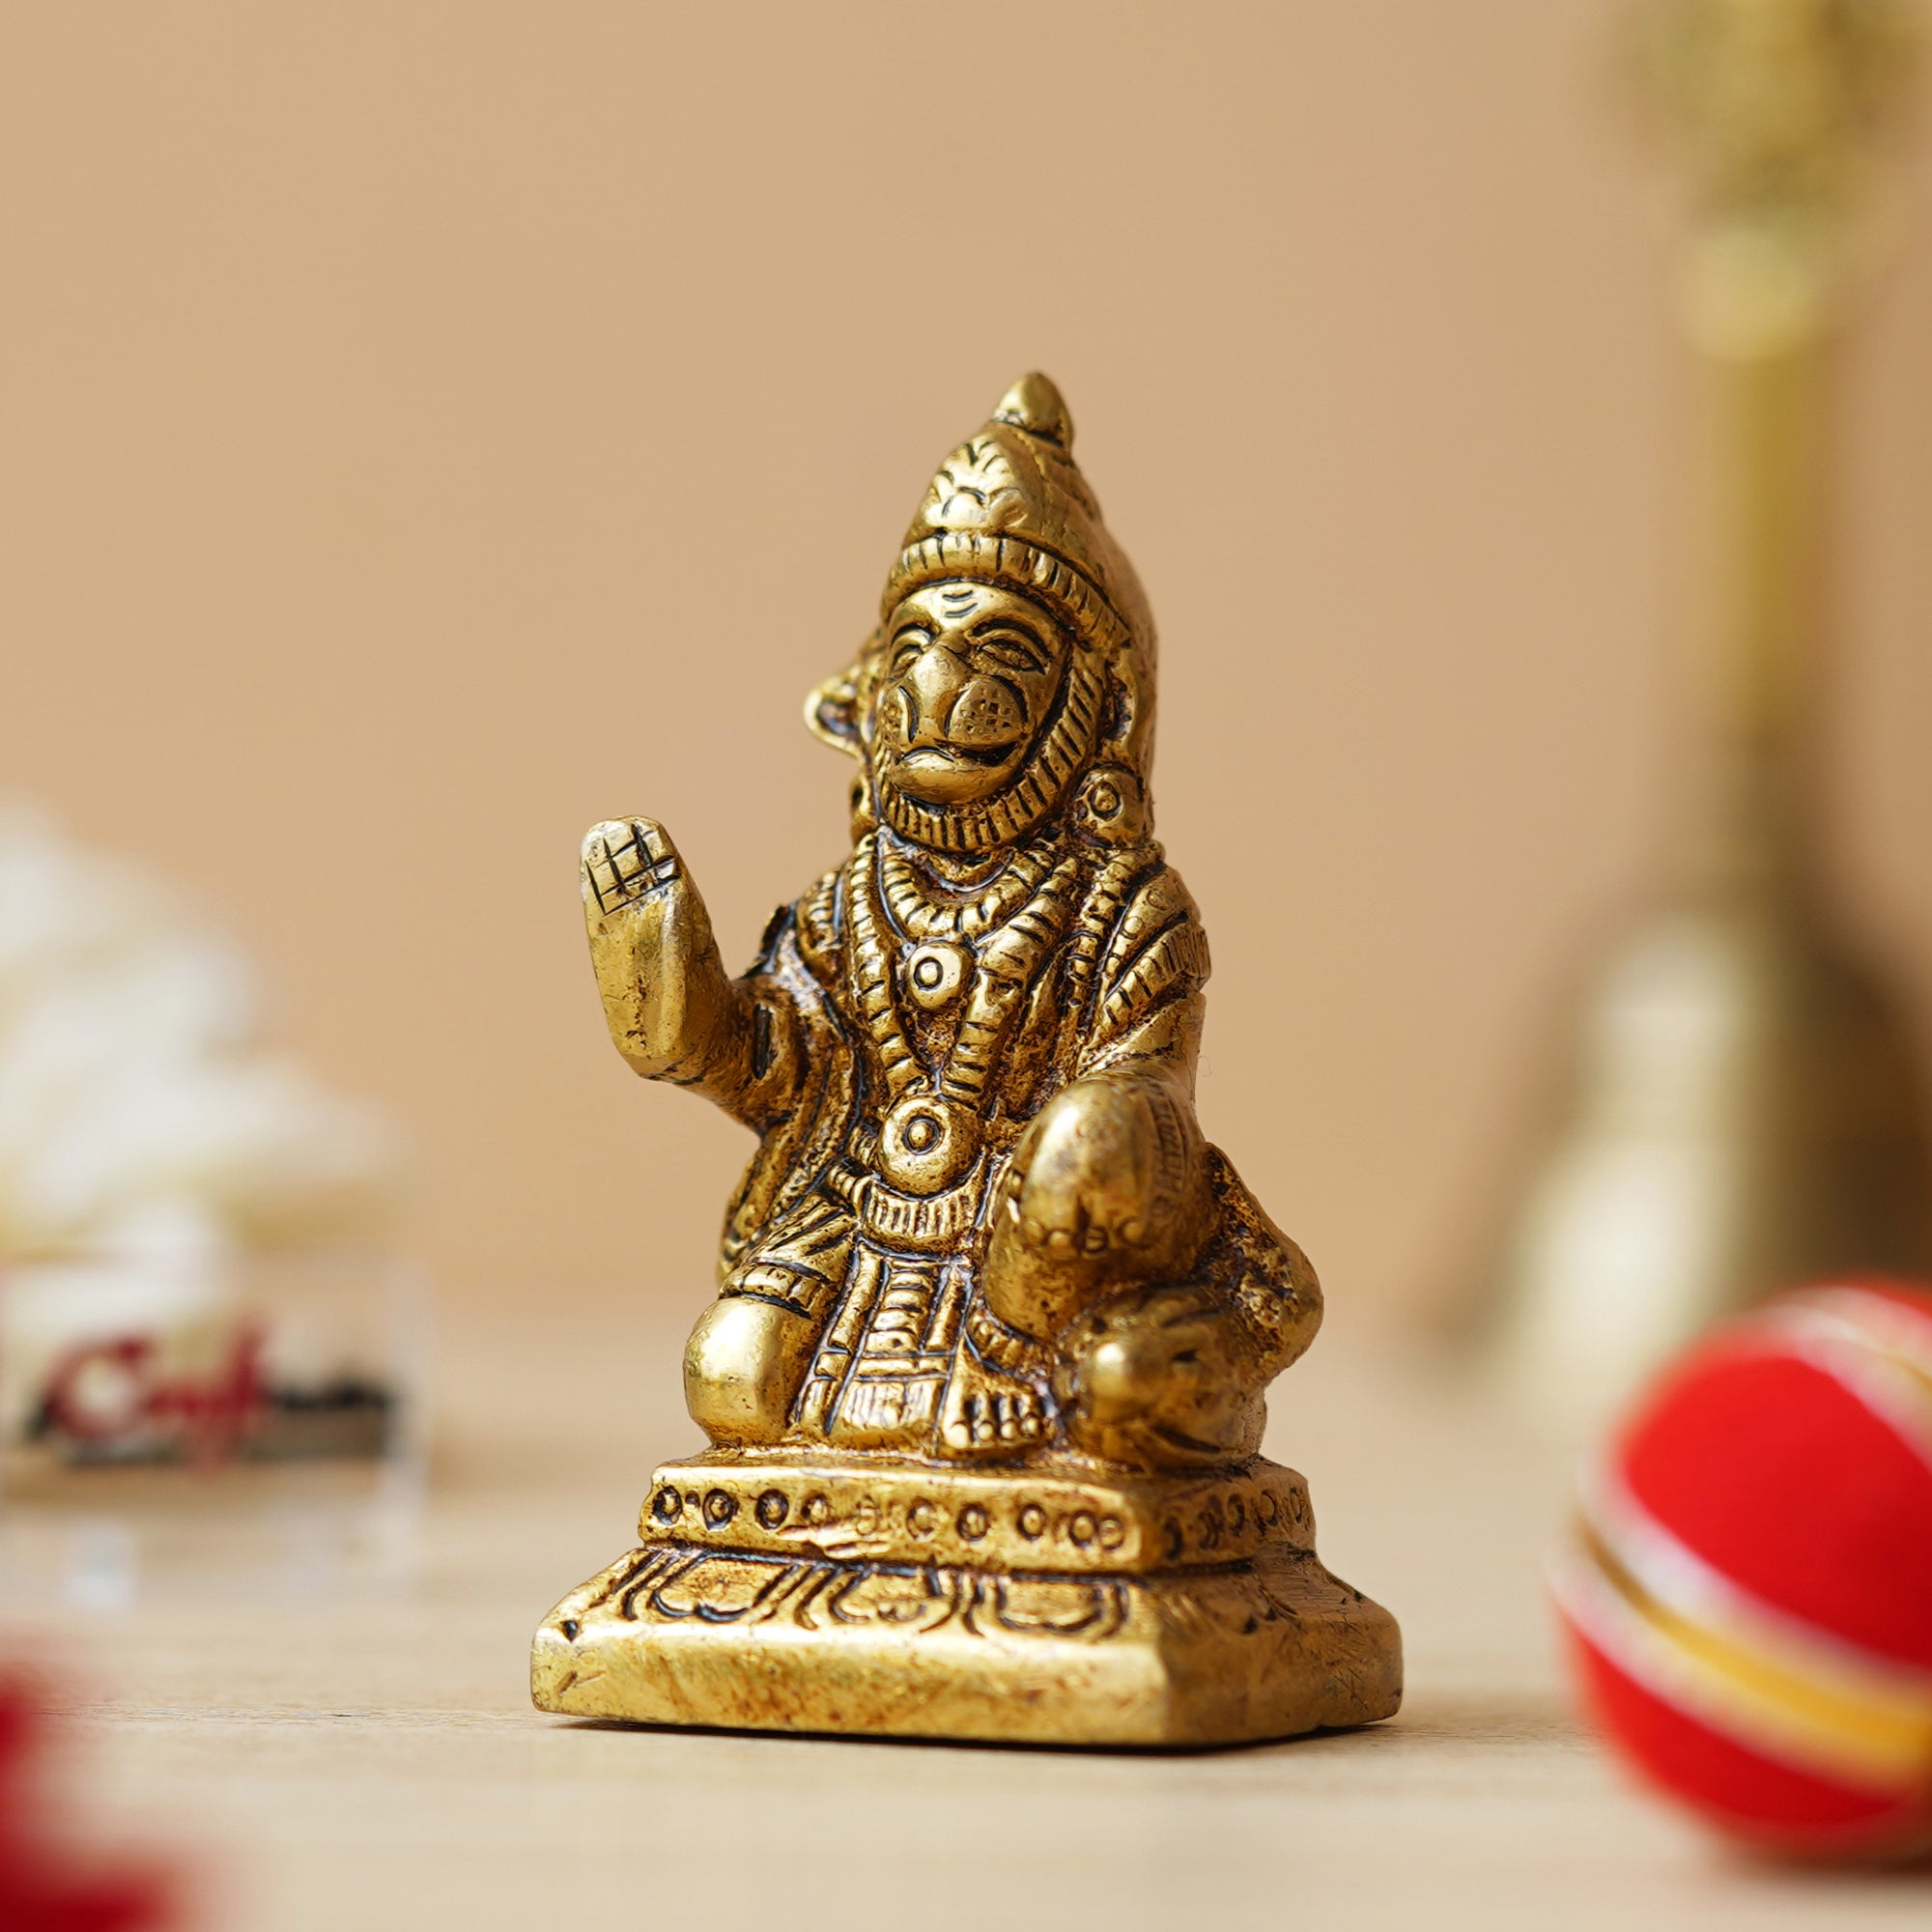 Golden Brass Blessing Lord Hanuman Statue Murti - Hindu God Idol for Home, Office, Temple Mandir - Hanuman Jayanti Gift 4